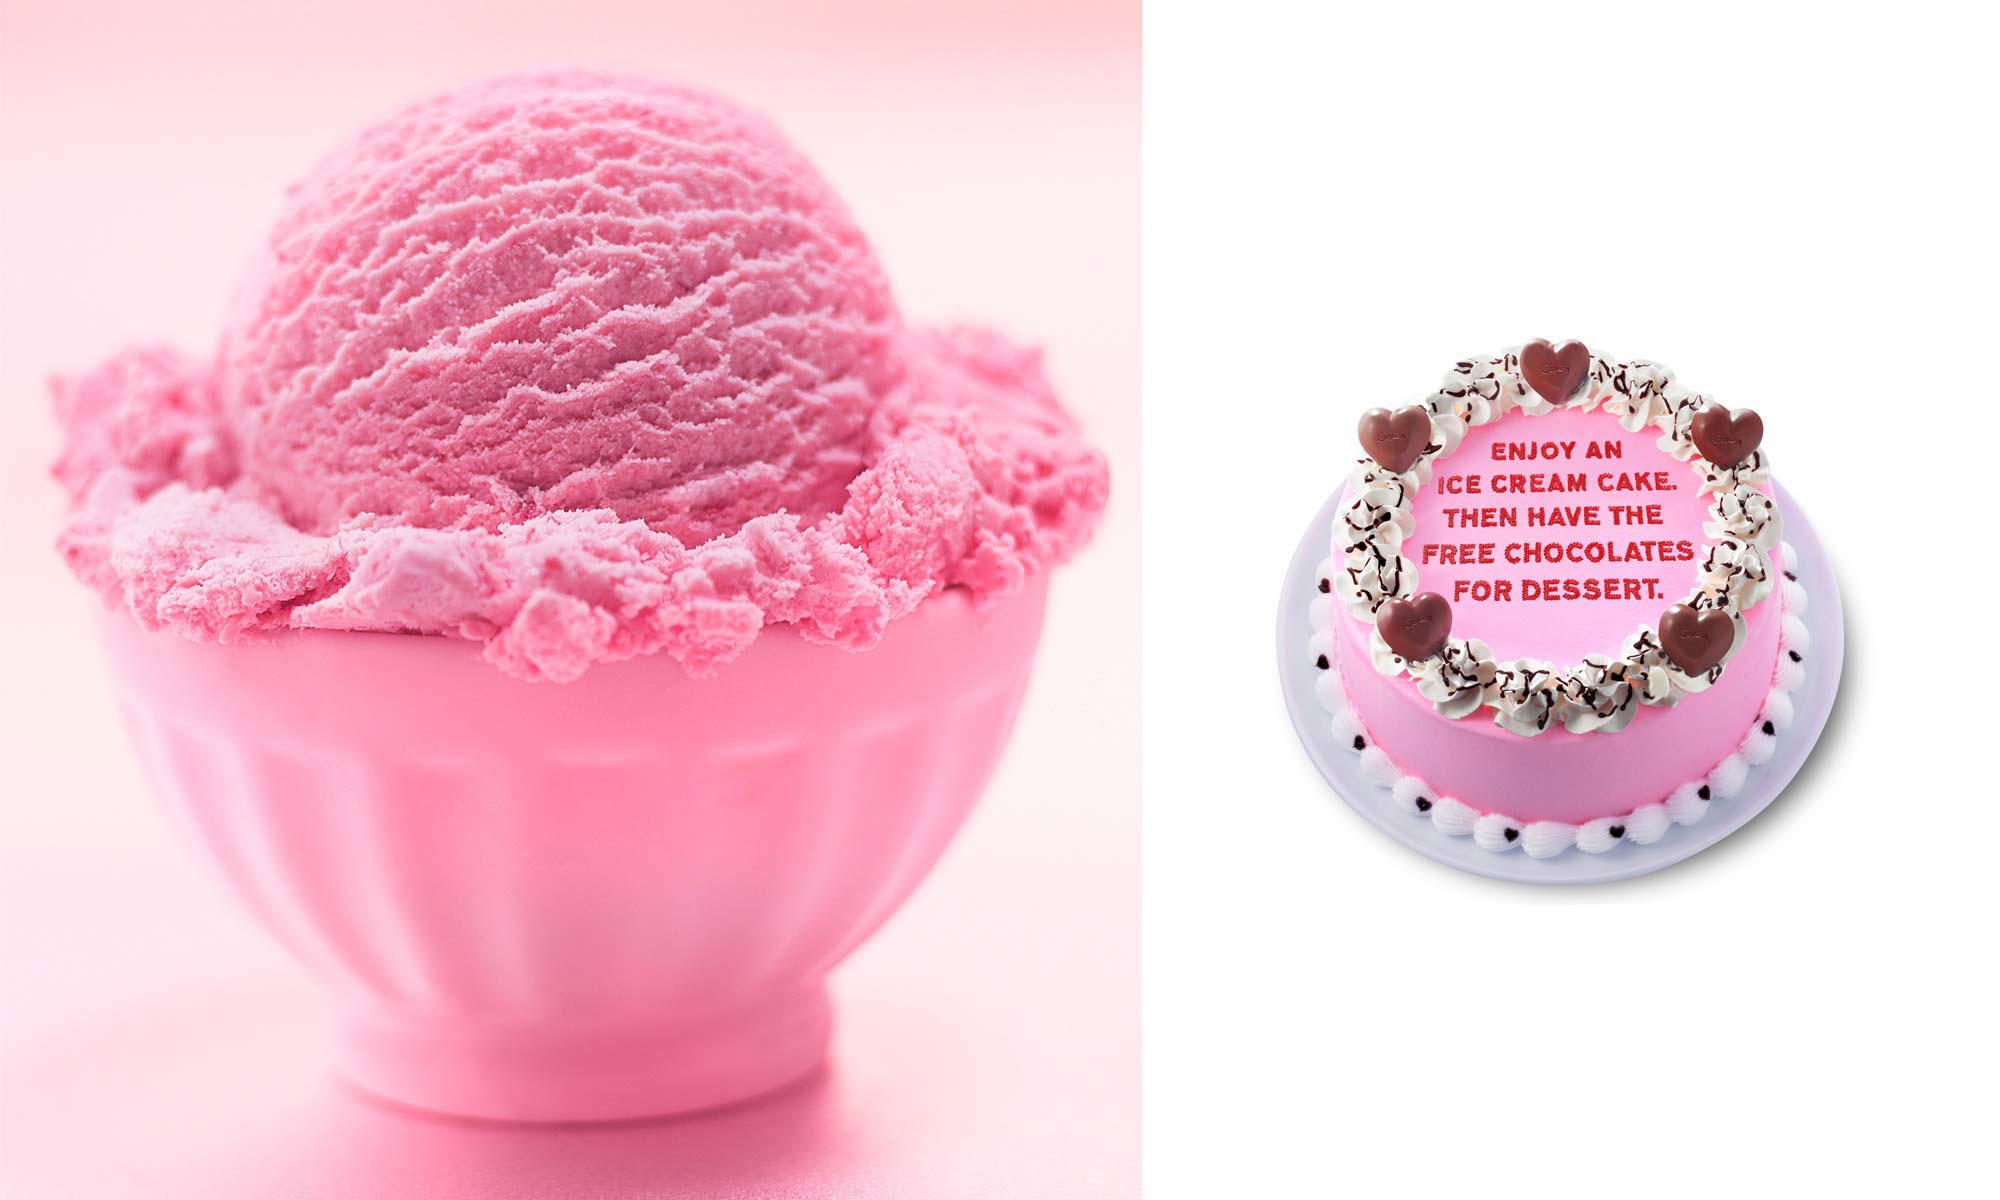 Baskin Robbins Ice Cream Cake and Strawberry Ice Cream Scoop